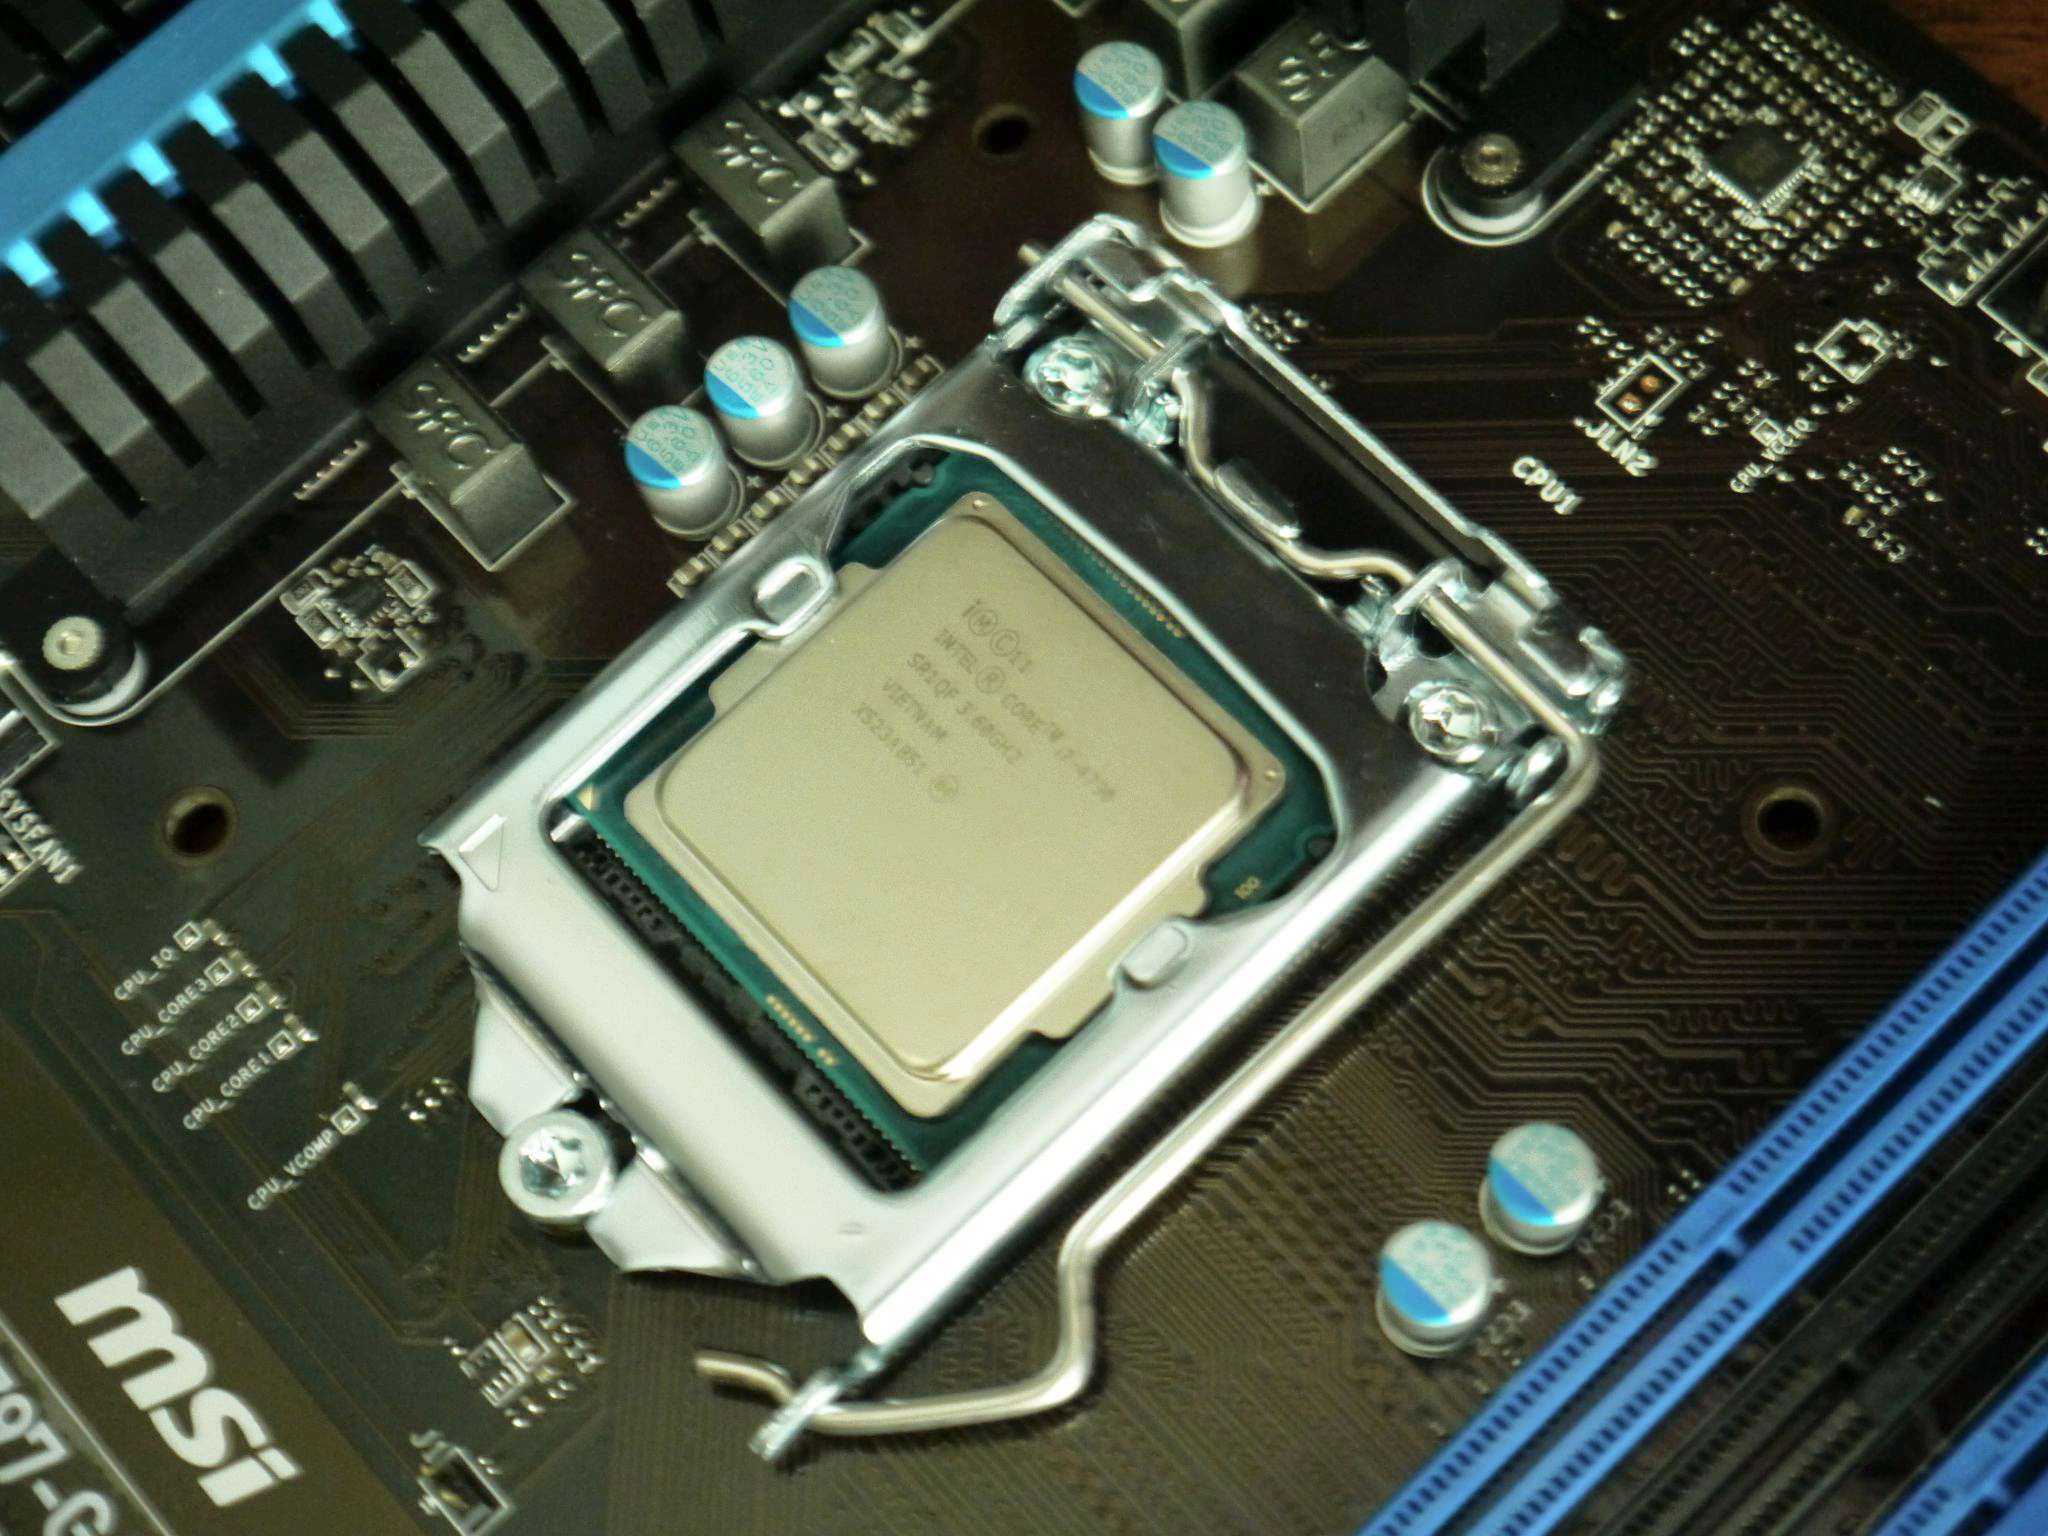 Intel core i5-11600kf & core i5-11400f 6 core rocket lake desktop cpu benchmarks leak out